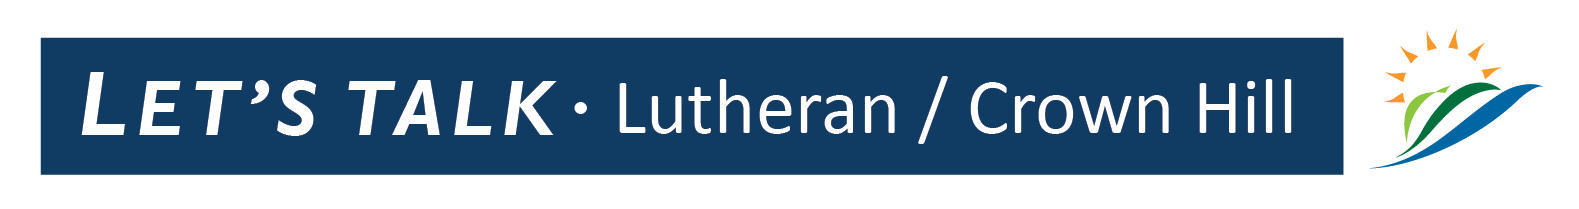 Let's Talk Lutheran / Crown Hill Logo